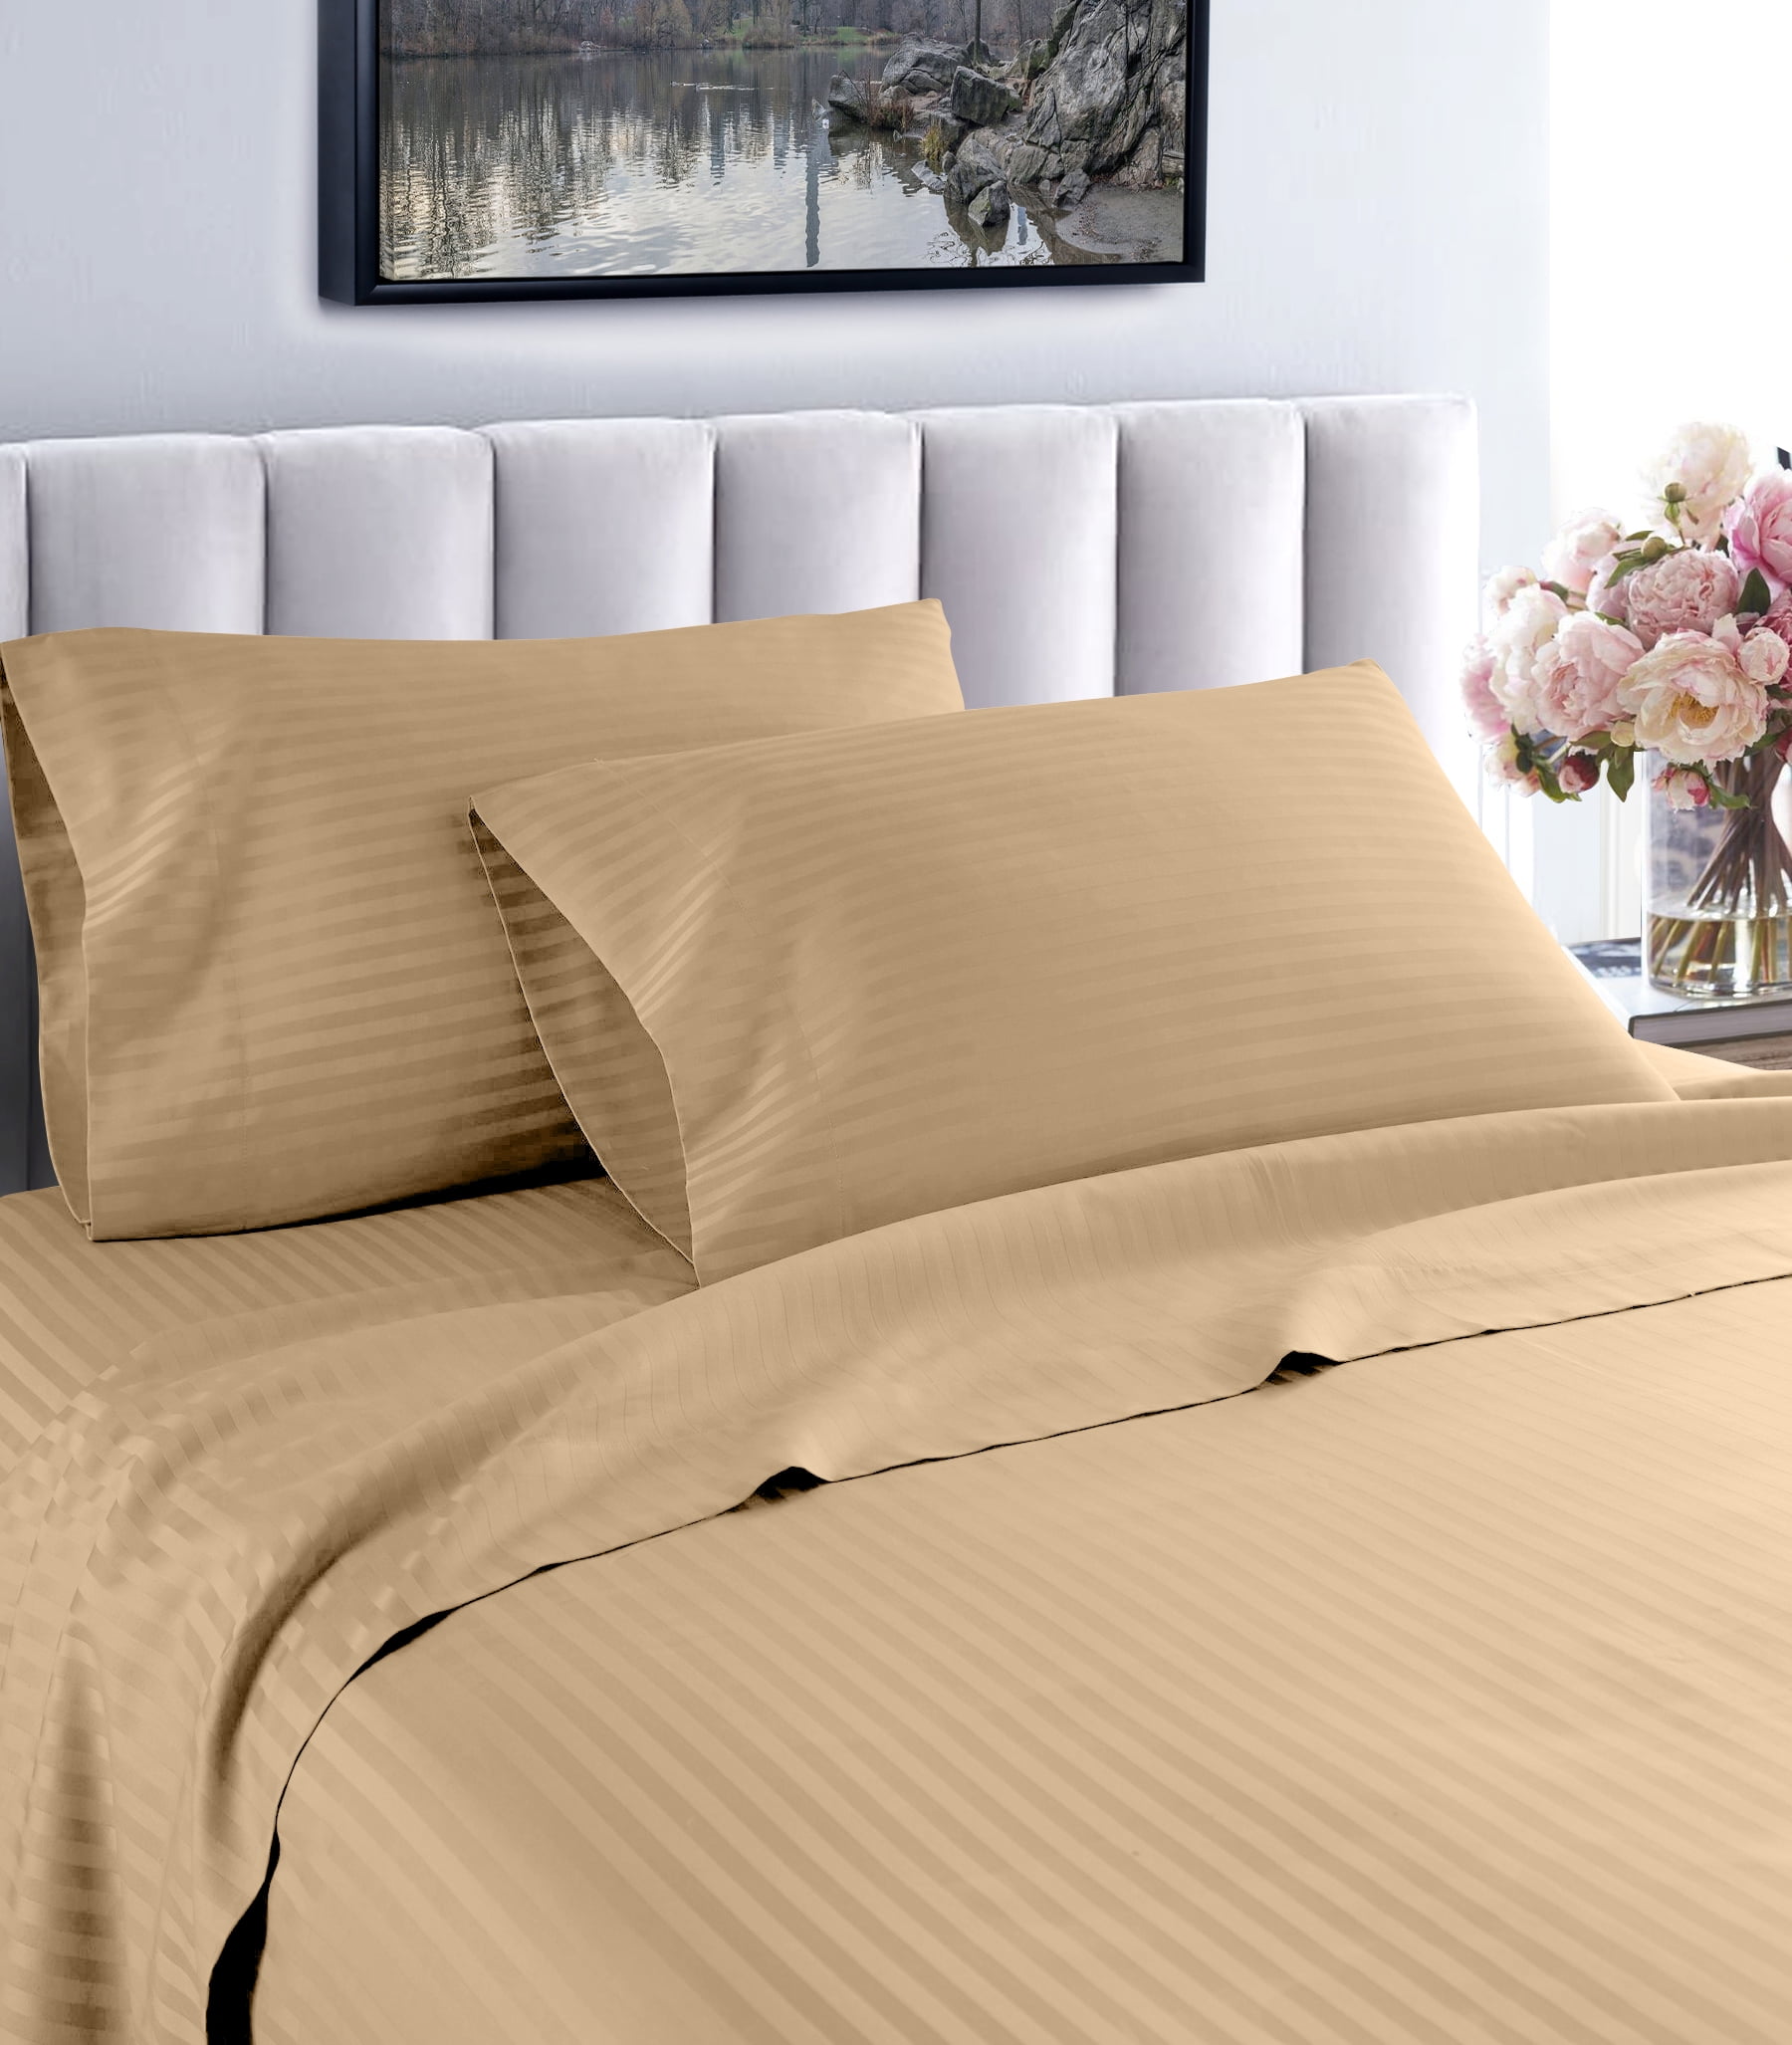 Pillowcases Pair 144 Threads Bedsheets 100% Cotton Sheet Set Fitted/Flat Sheet